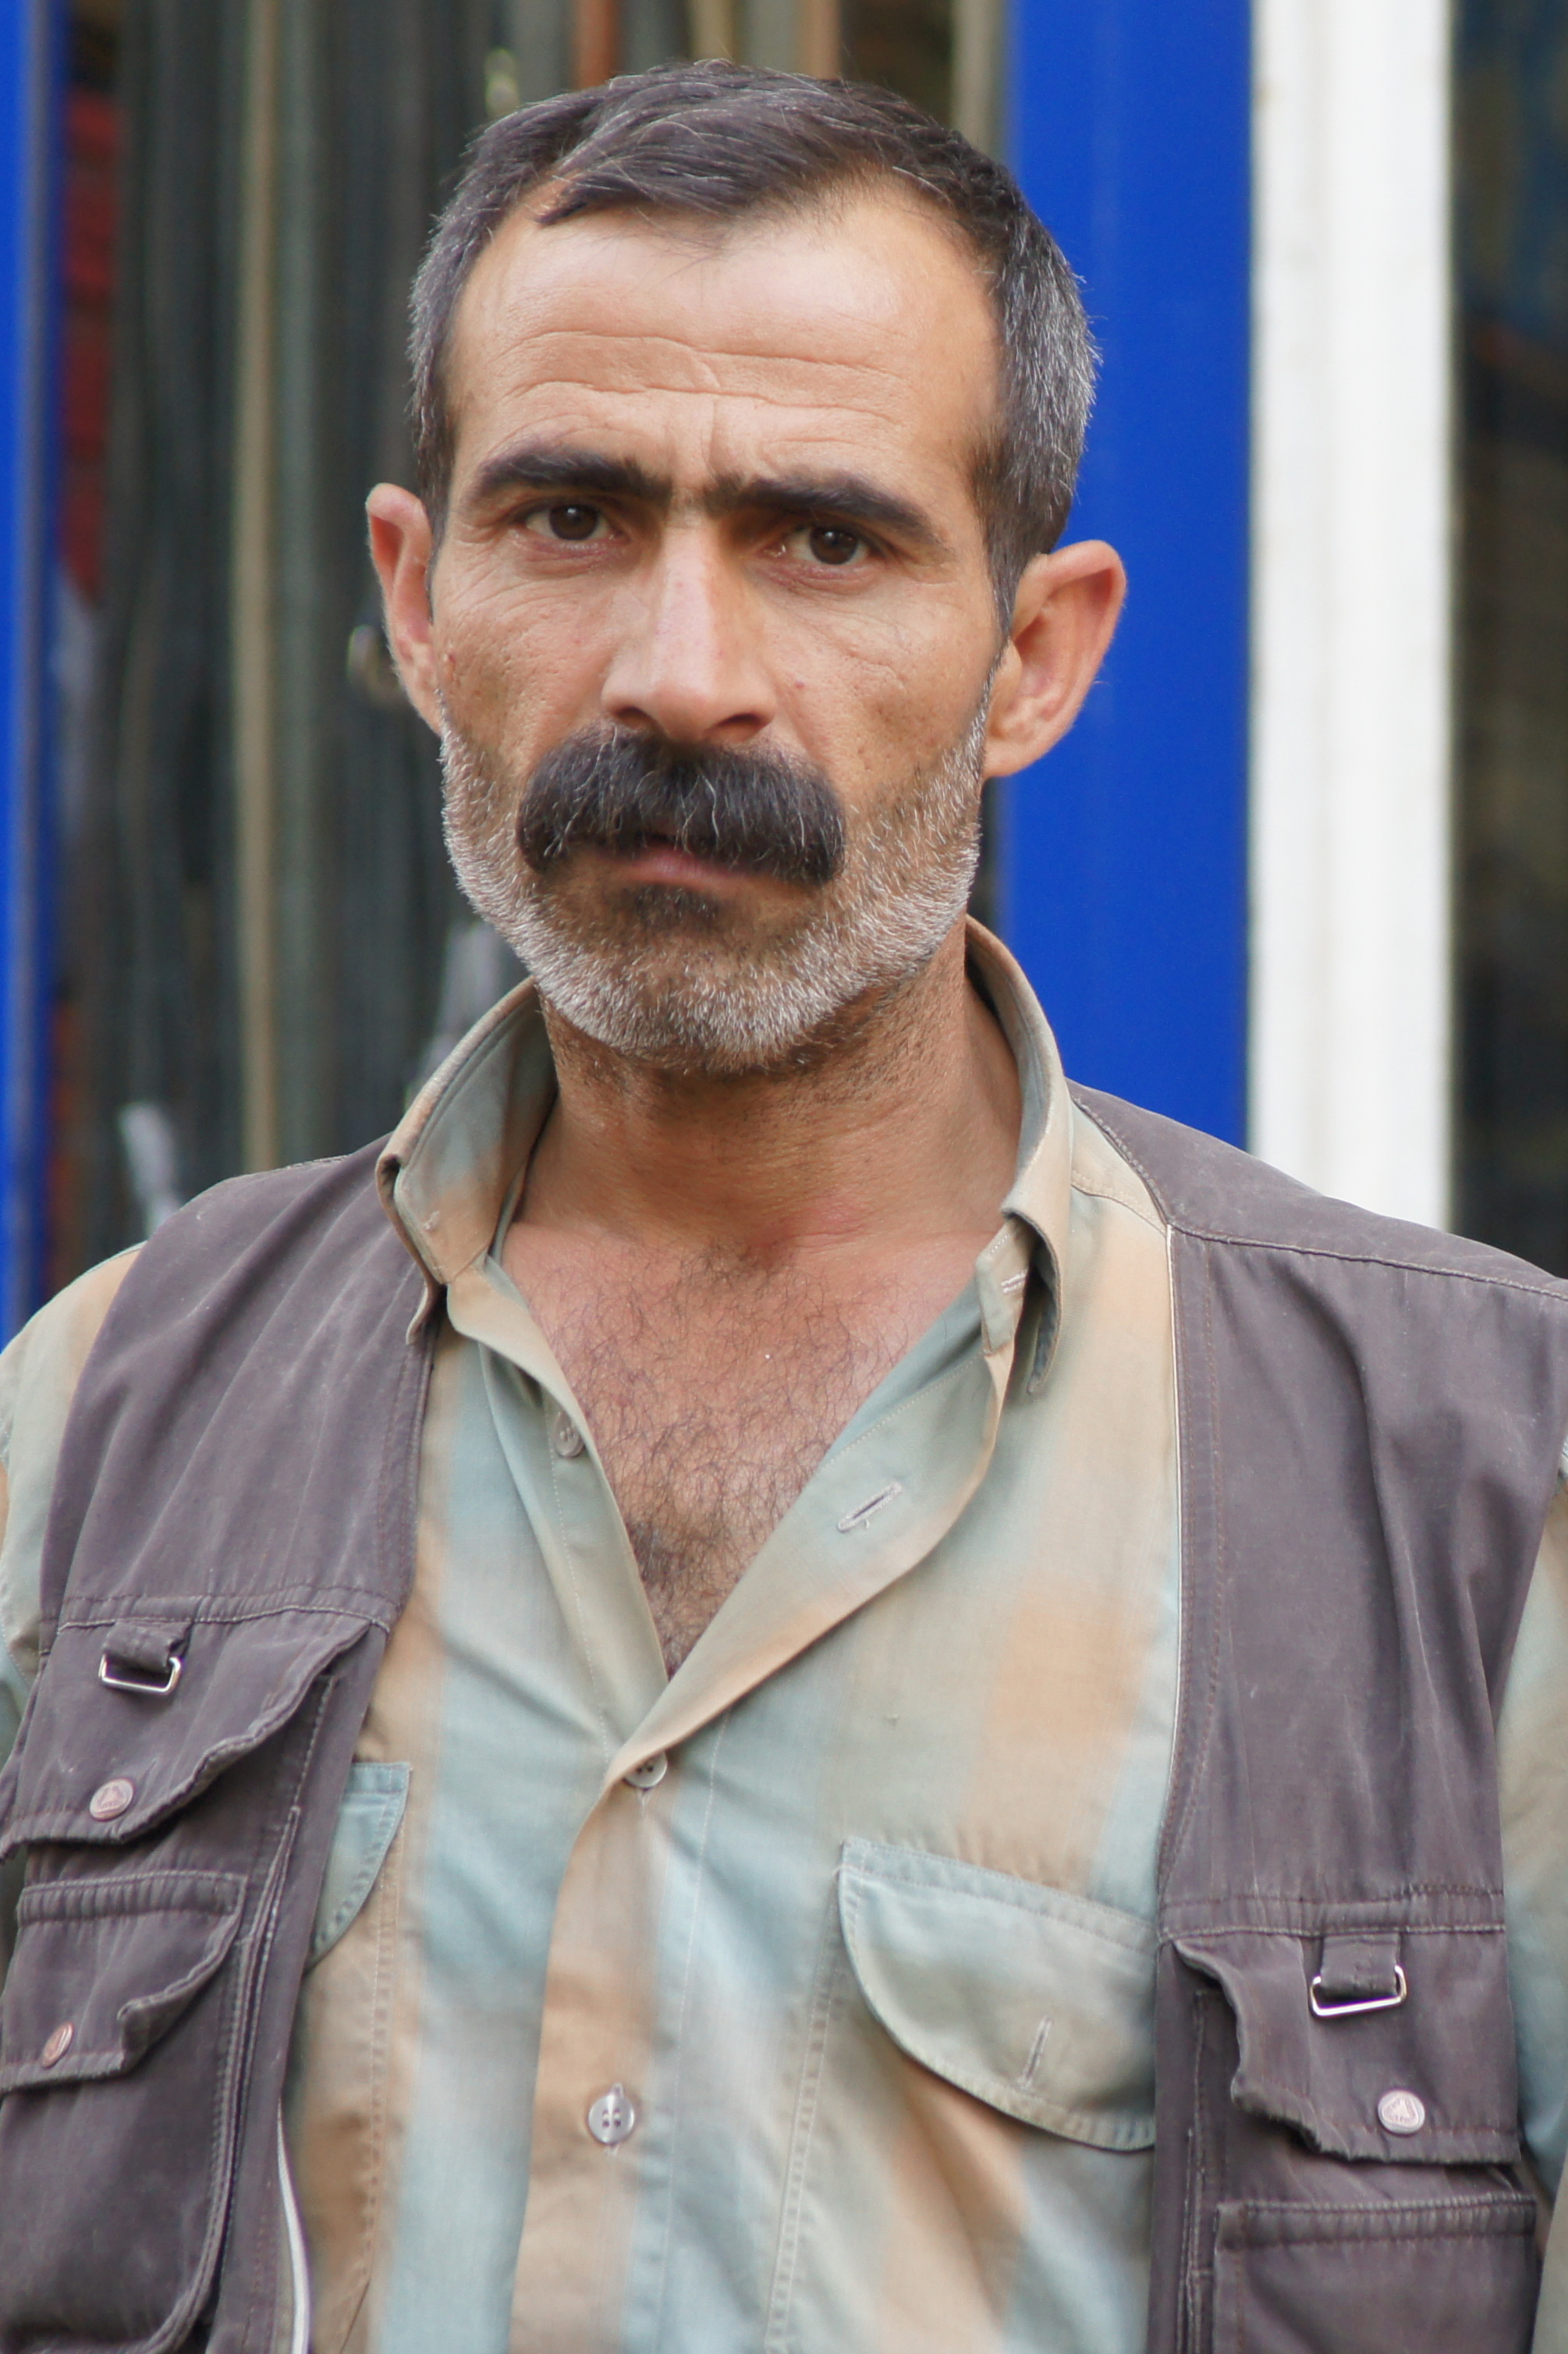 Classify This Kurd Man